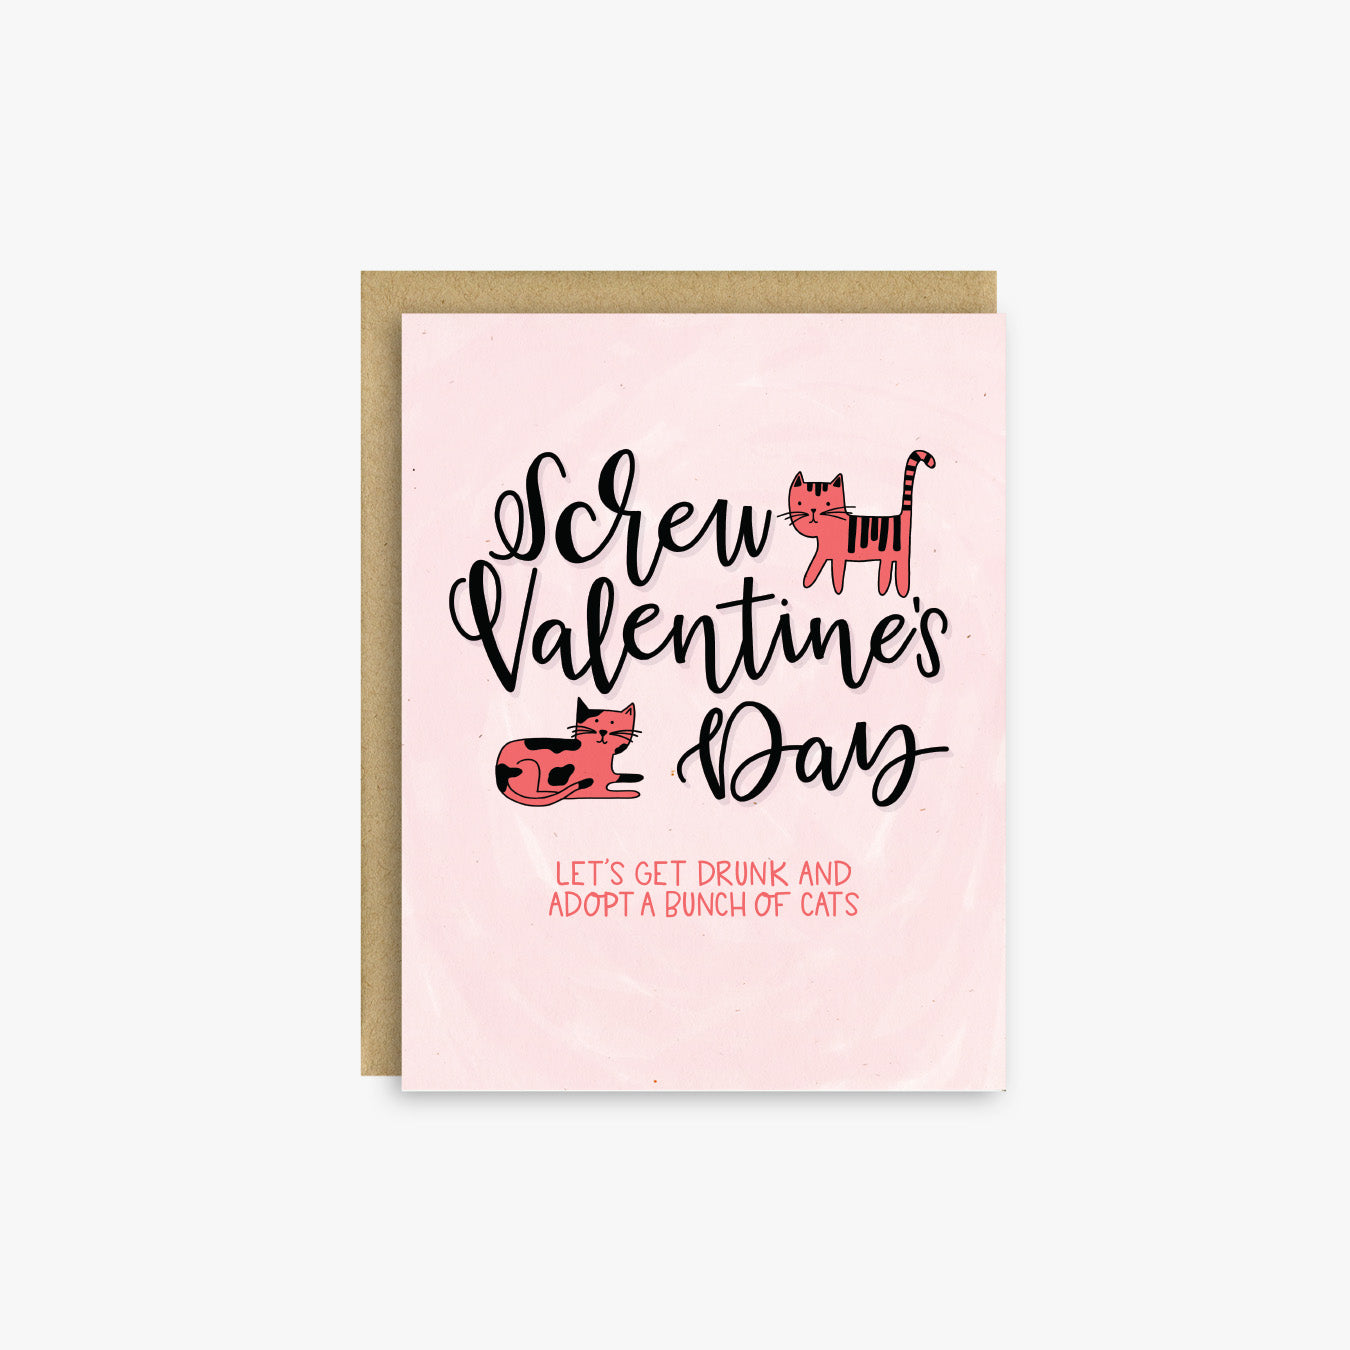 Screw Valentine's Day Card